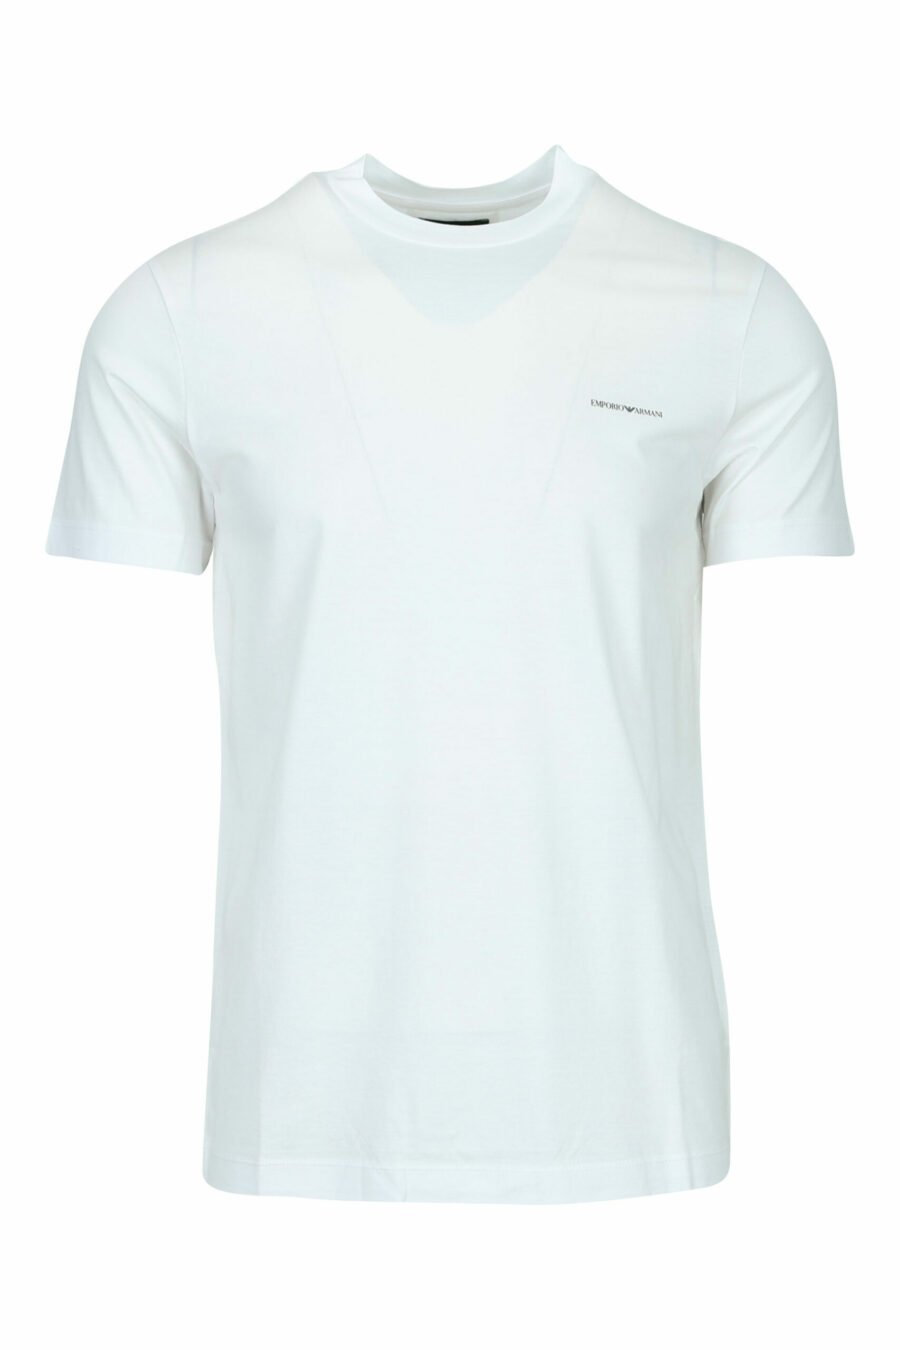 Camiseta blanca con minilogo "emporio" - 8059516200147 scaled